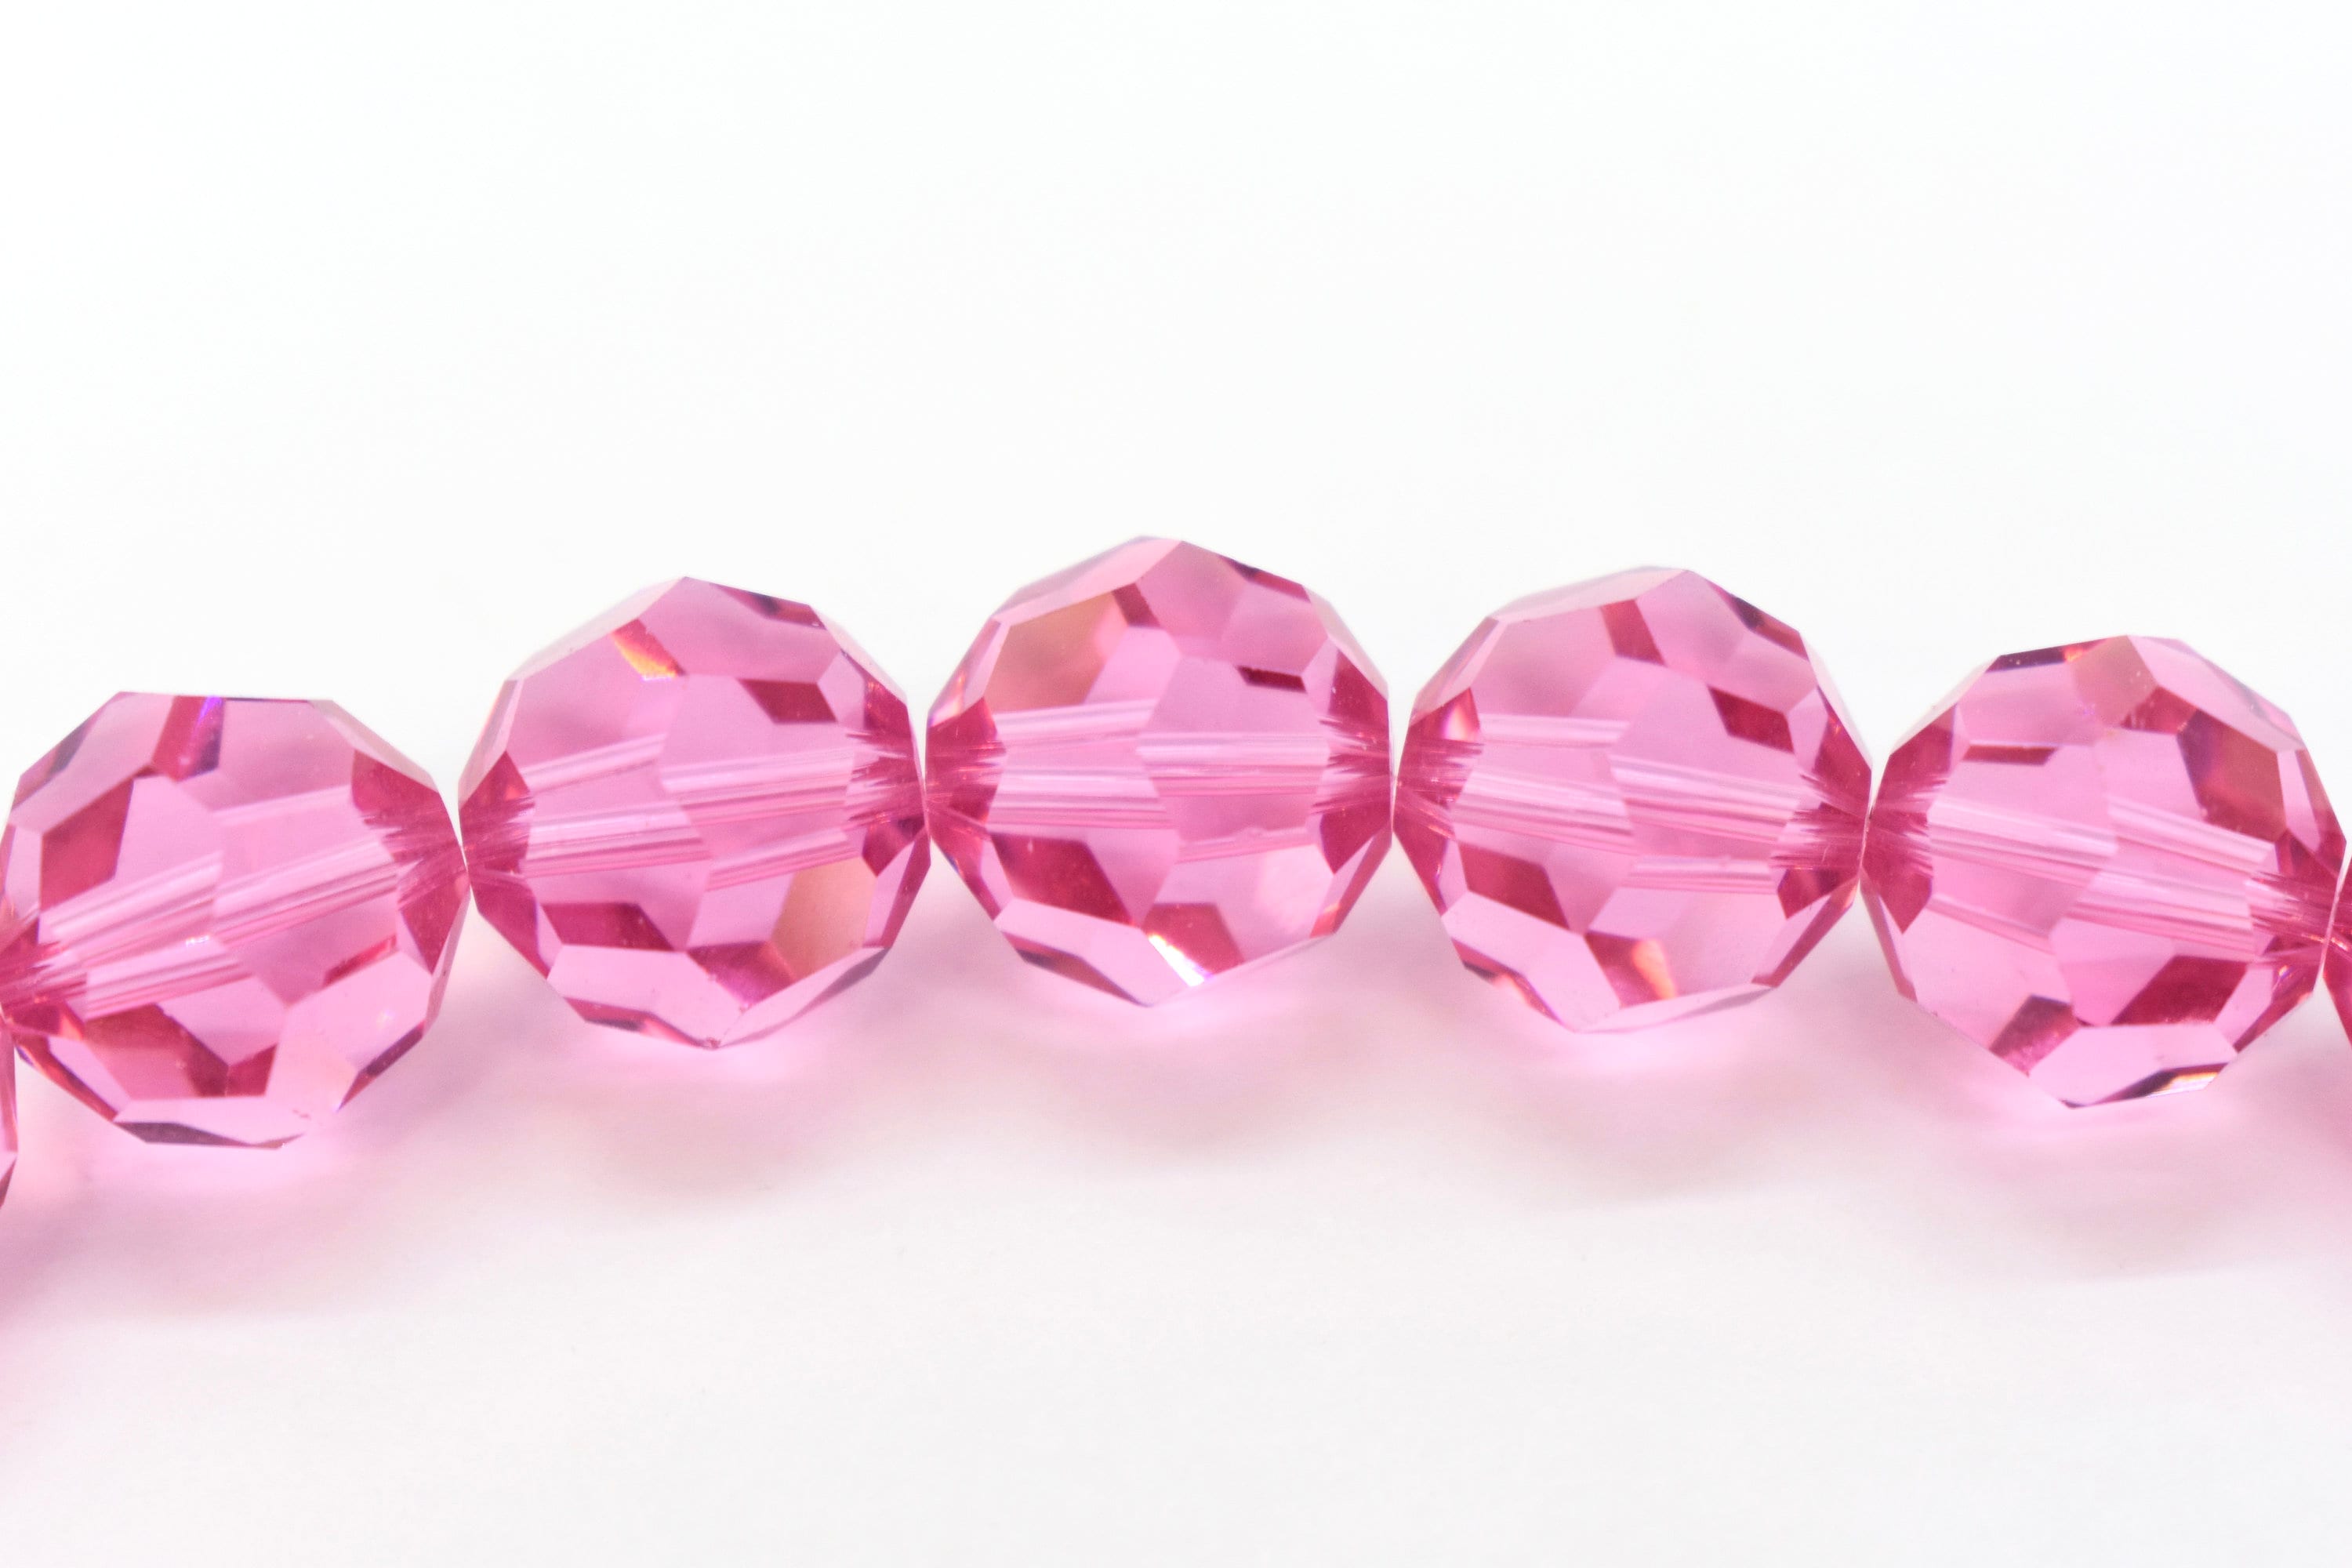 Meenakari Beads Strand Gold Tone Hot Pink Crystal Beads 90 Long